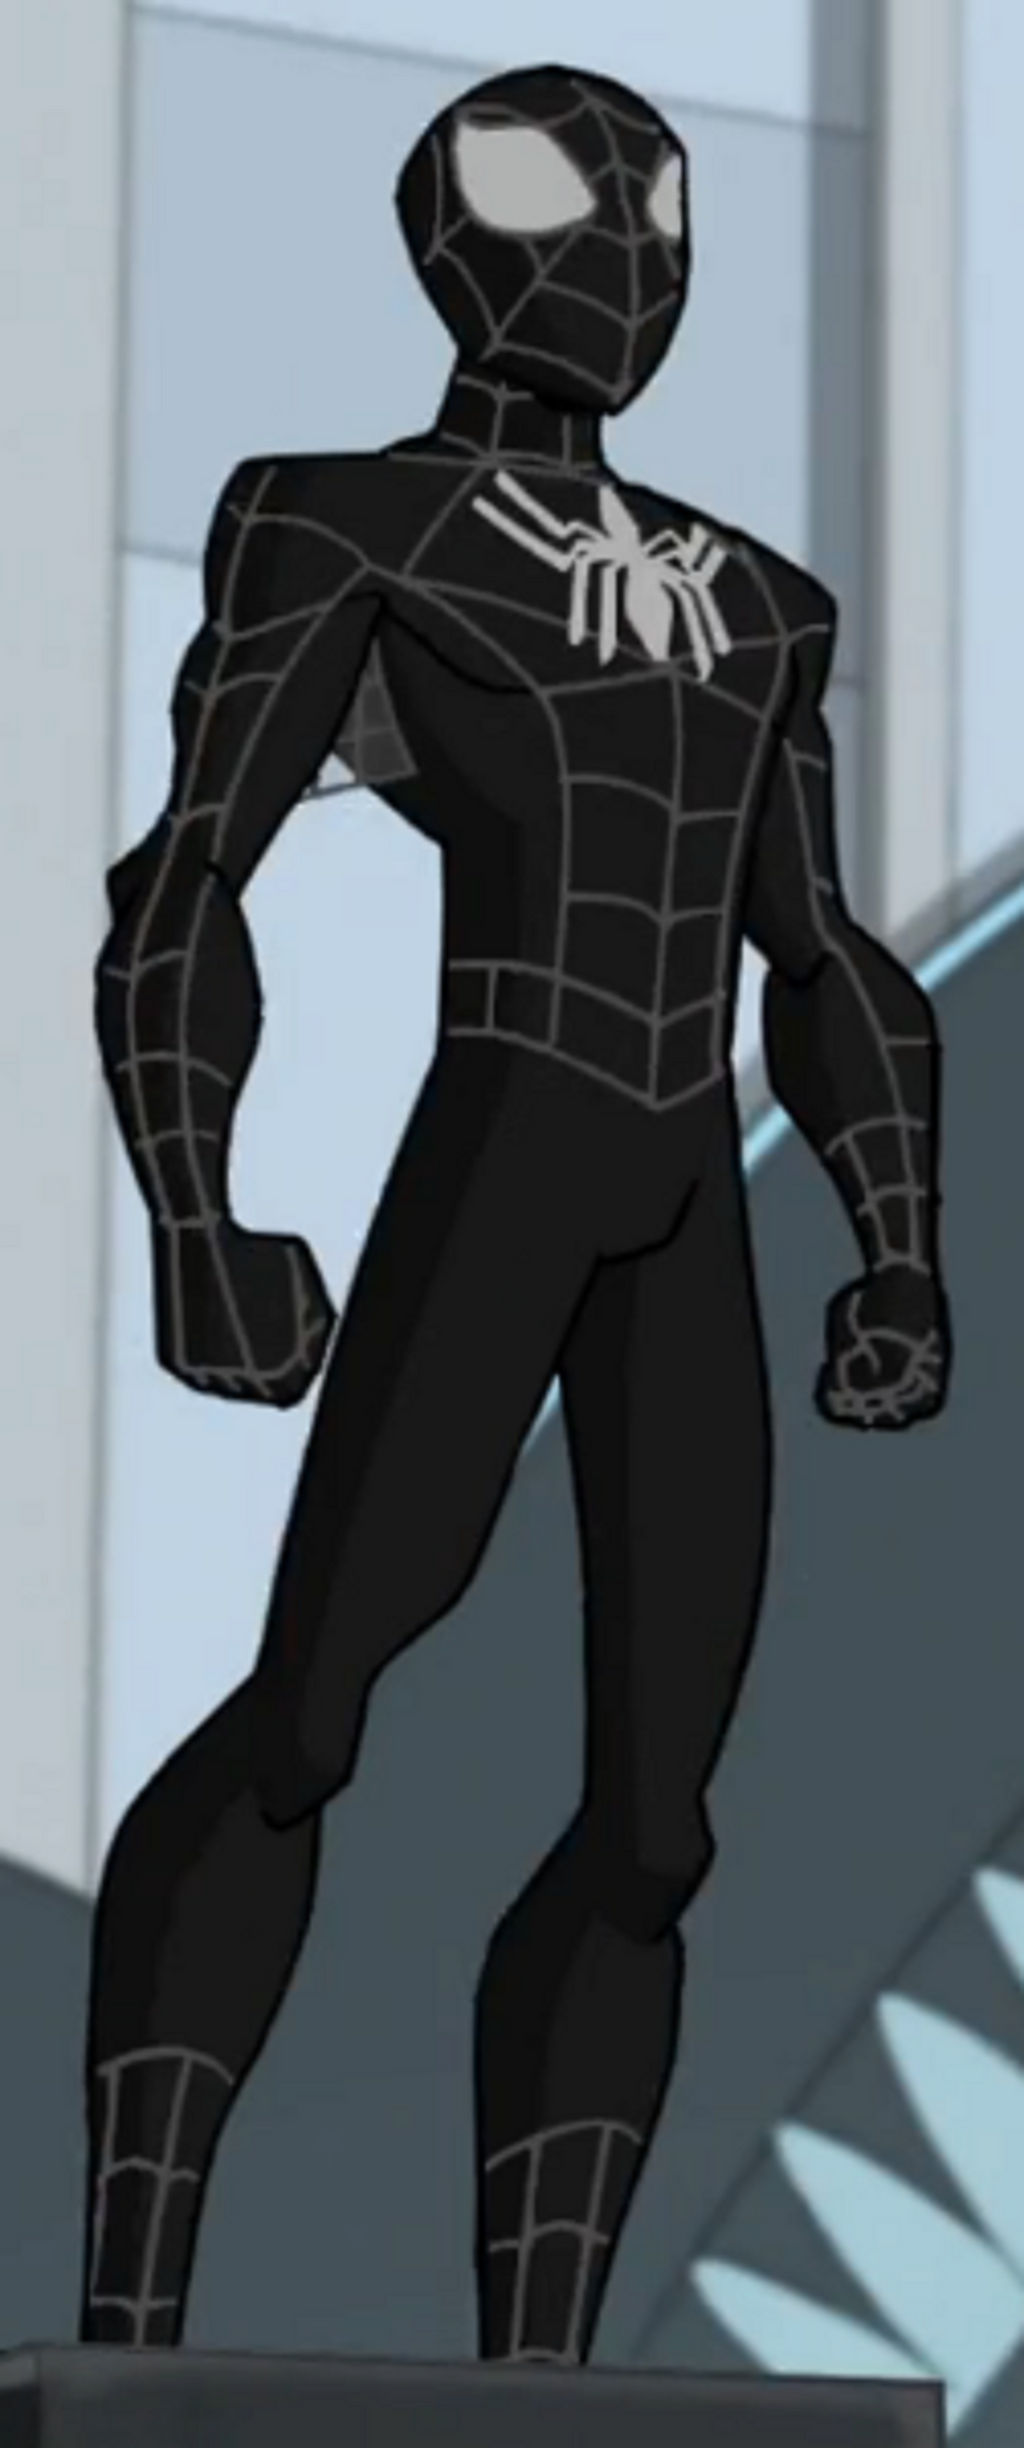 the_spectacular_spider_man_black_suit_v1_by_sonimbleinim_dcbluj3-fullview.jpg